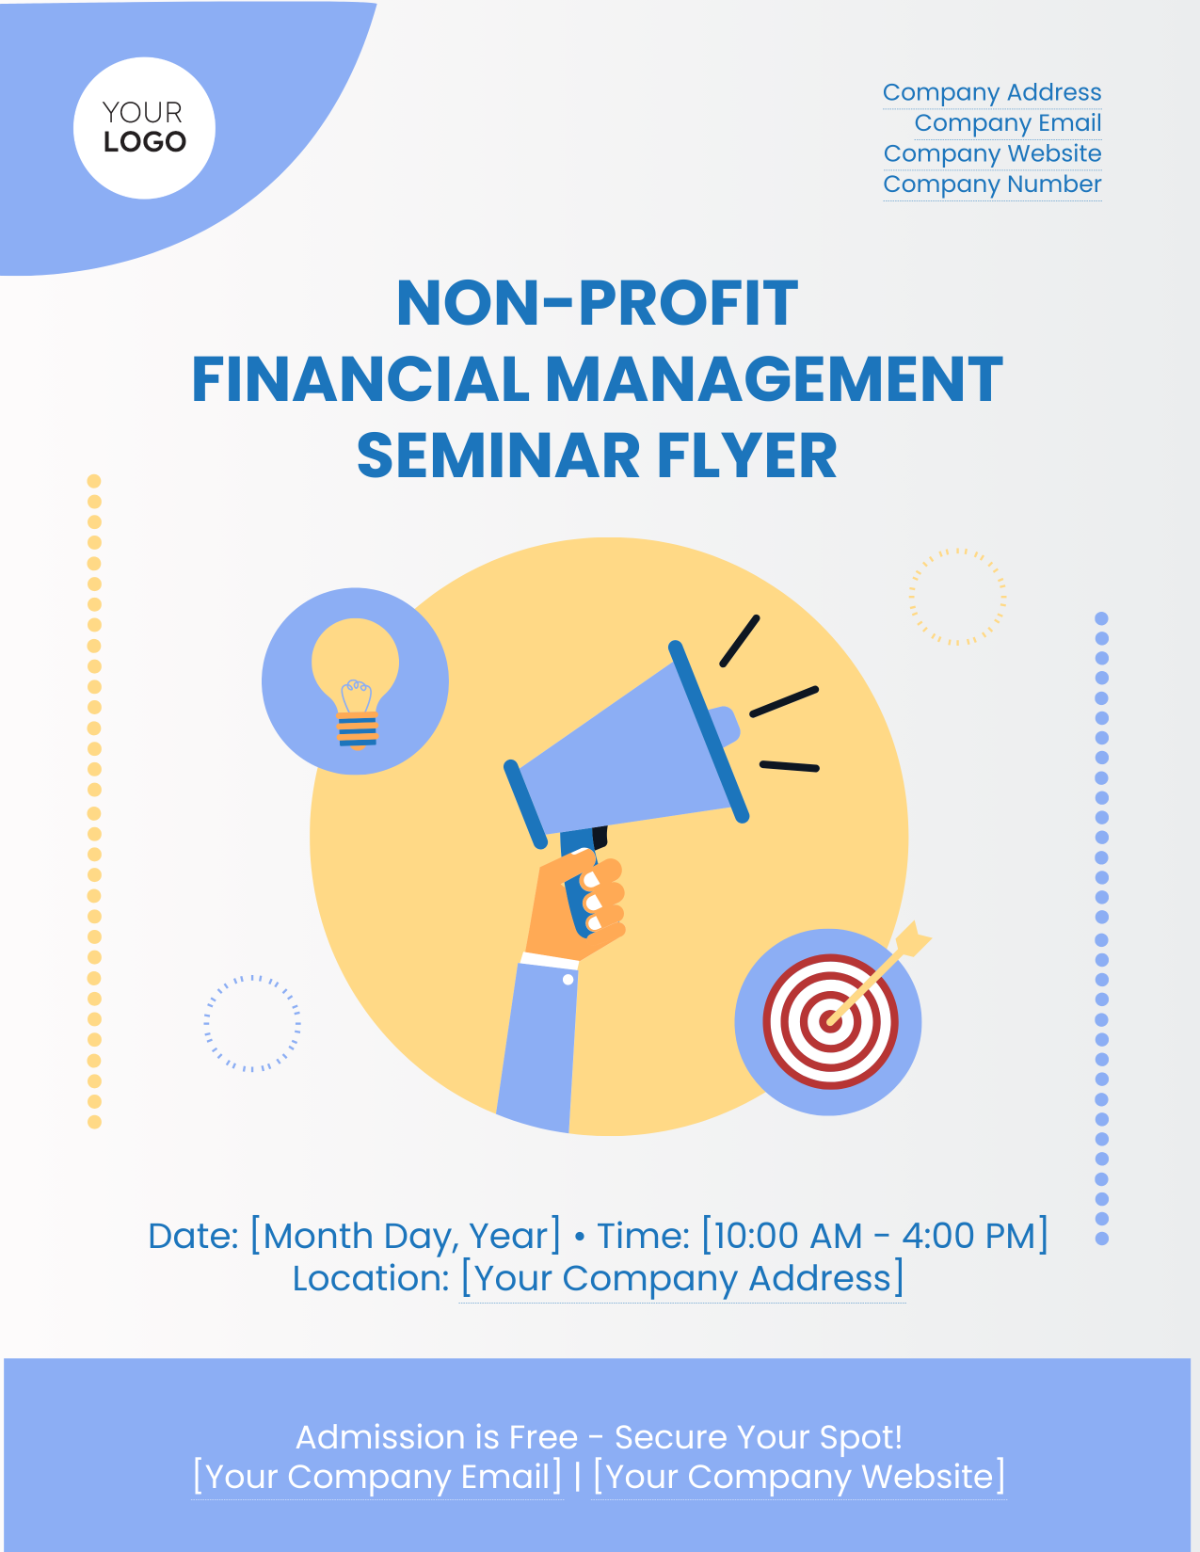 Non-Profit Financial Management Seminar Flyer Template